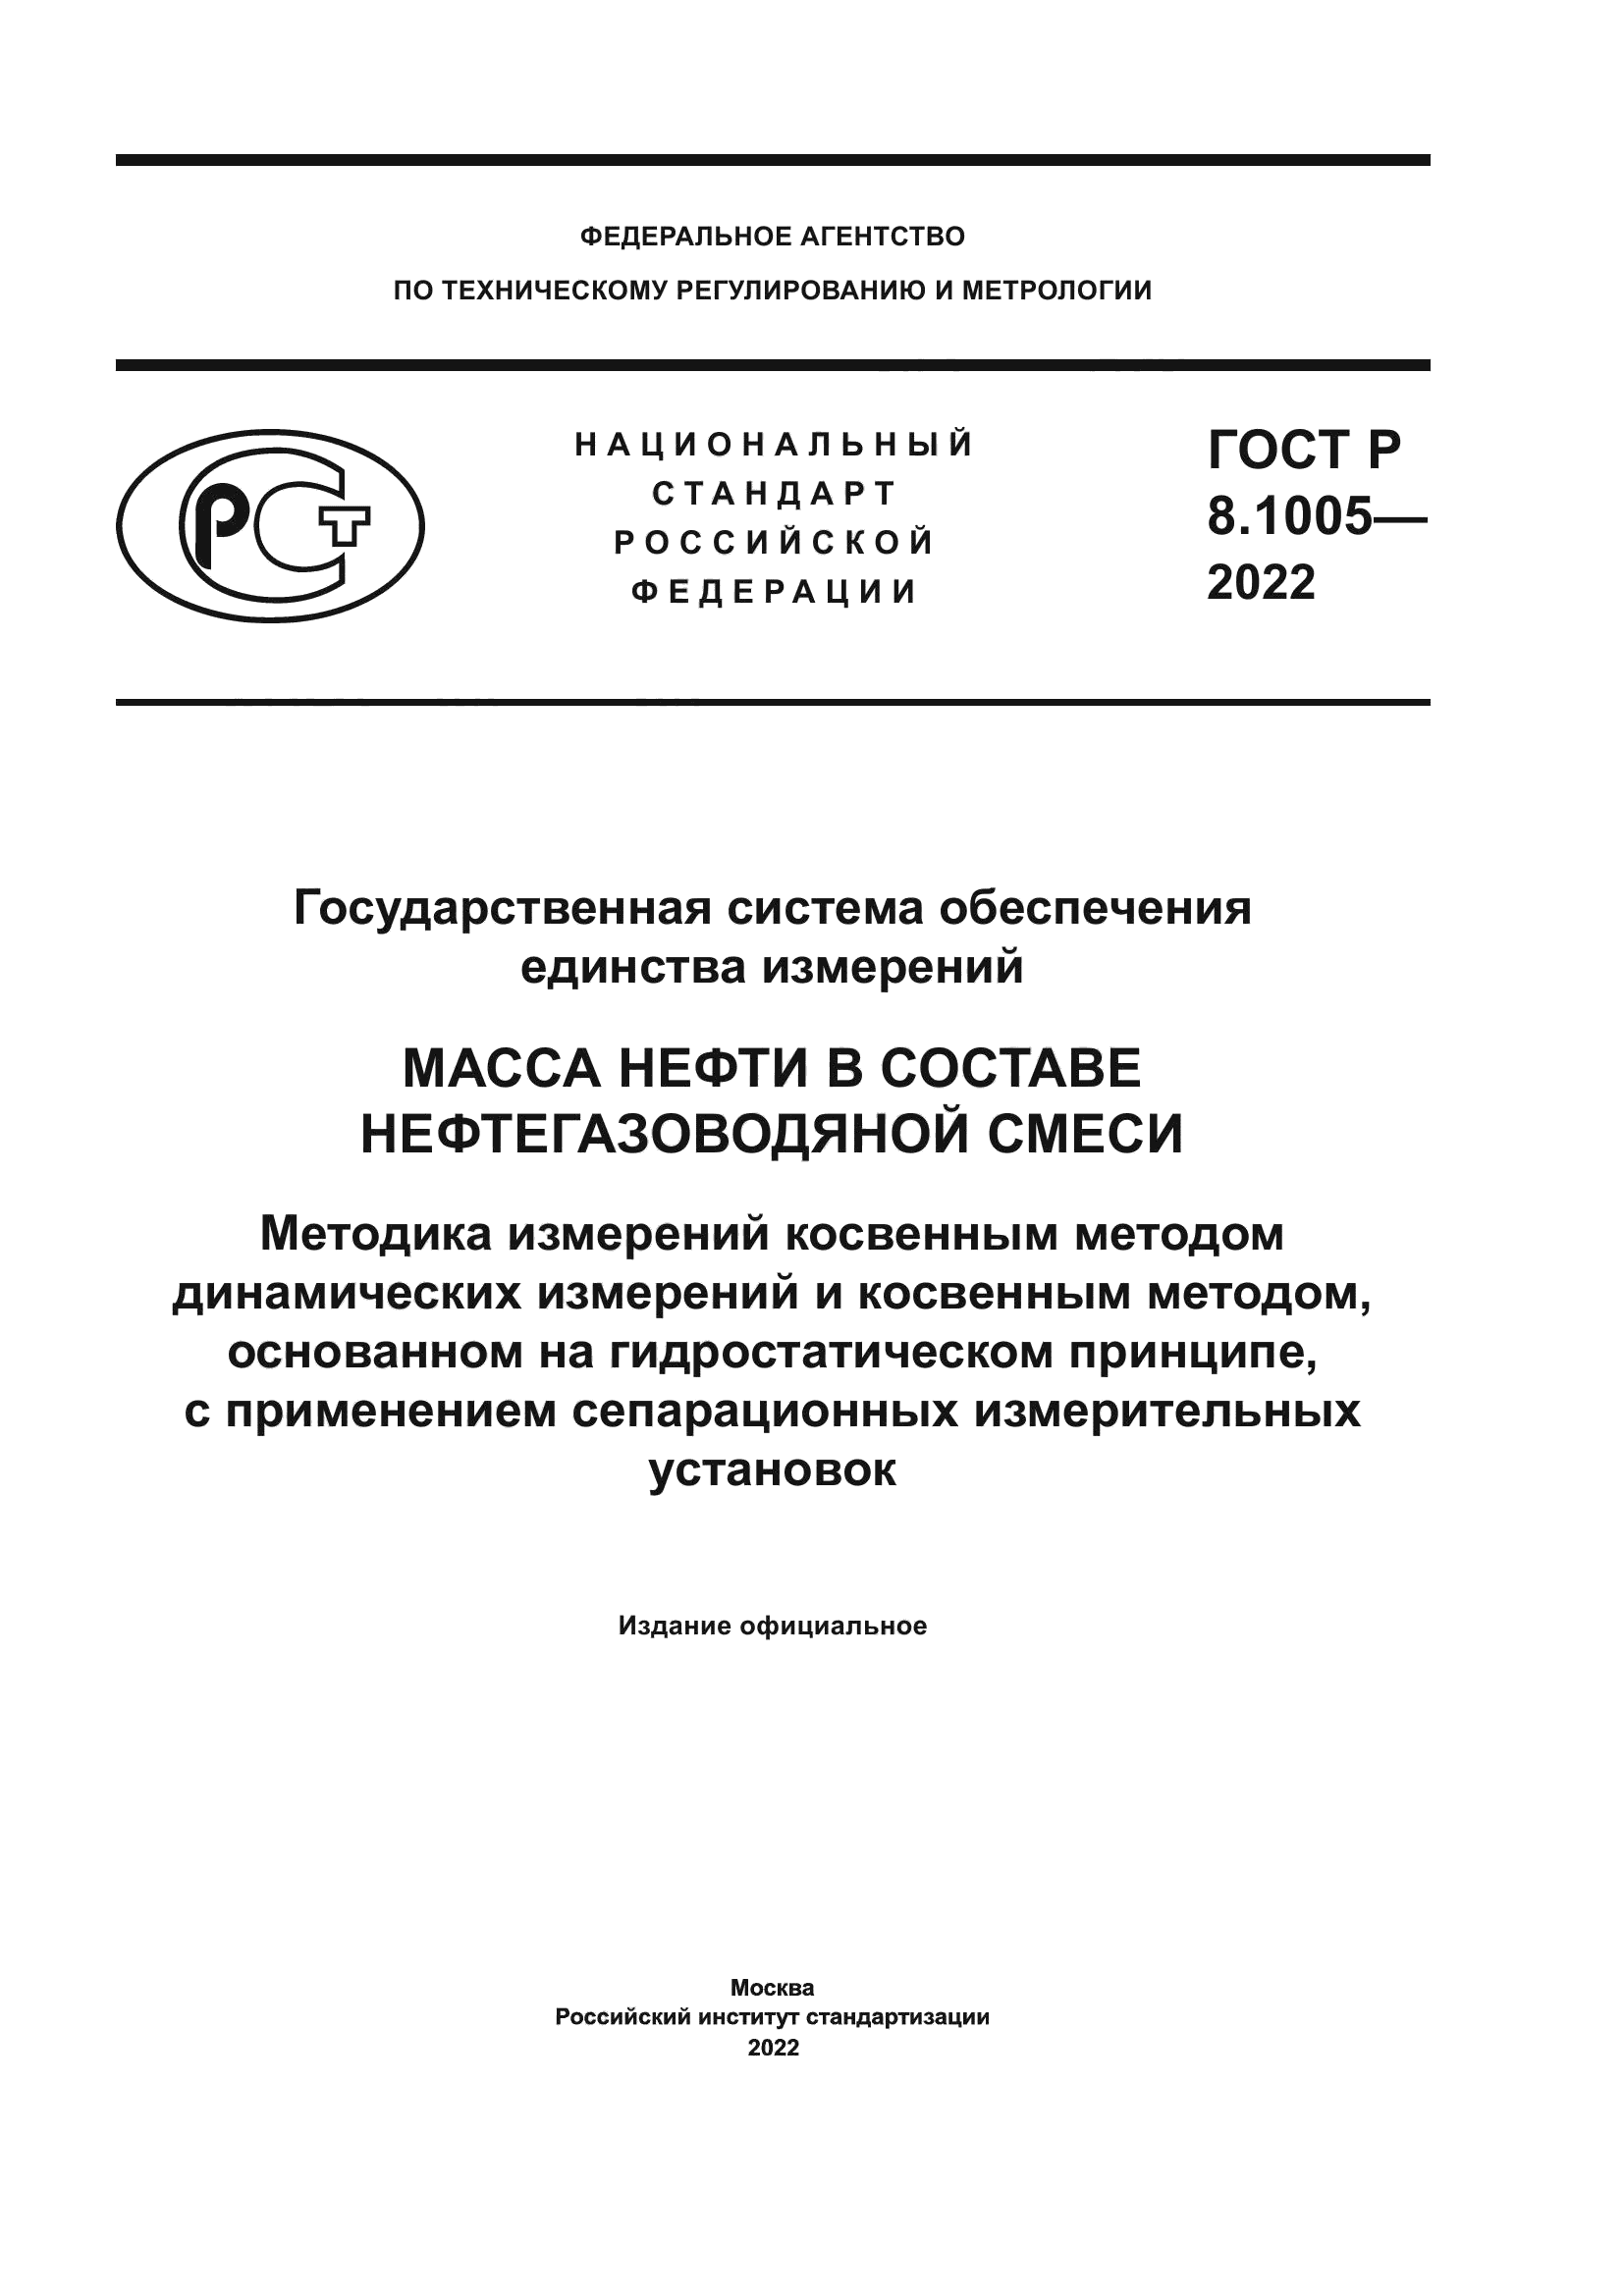 ГОСТ Р 8.1005-2022